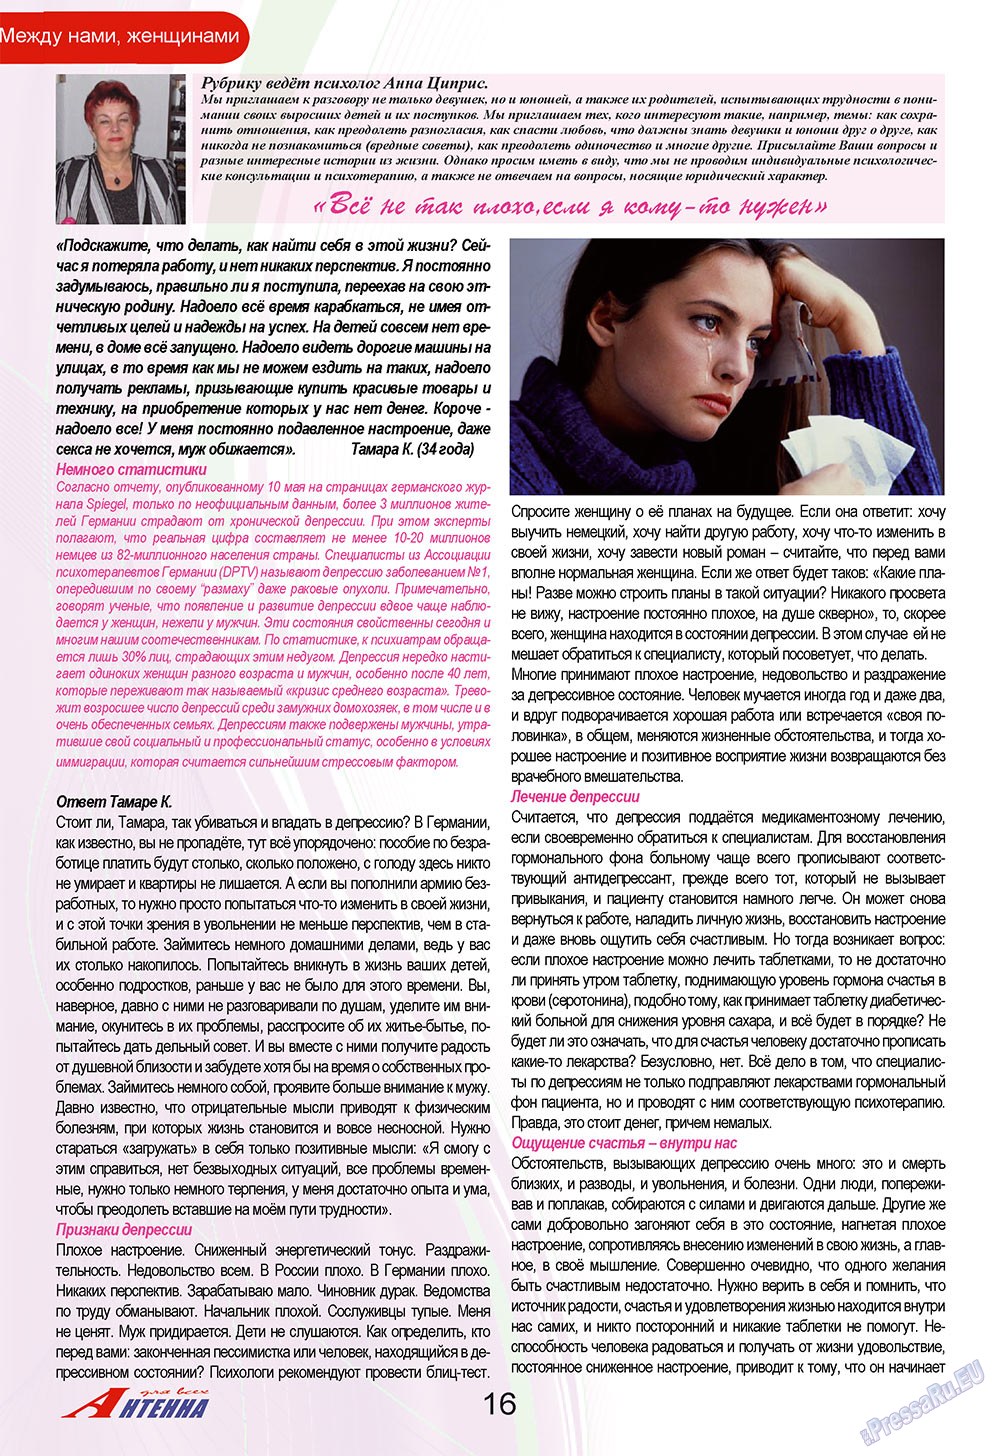 Антенна (журнал). 2009 год, номер 4, стр. 16